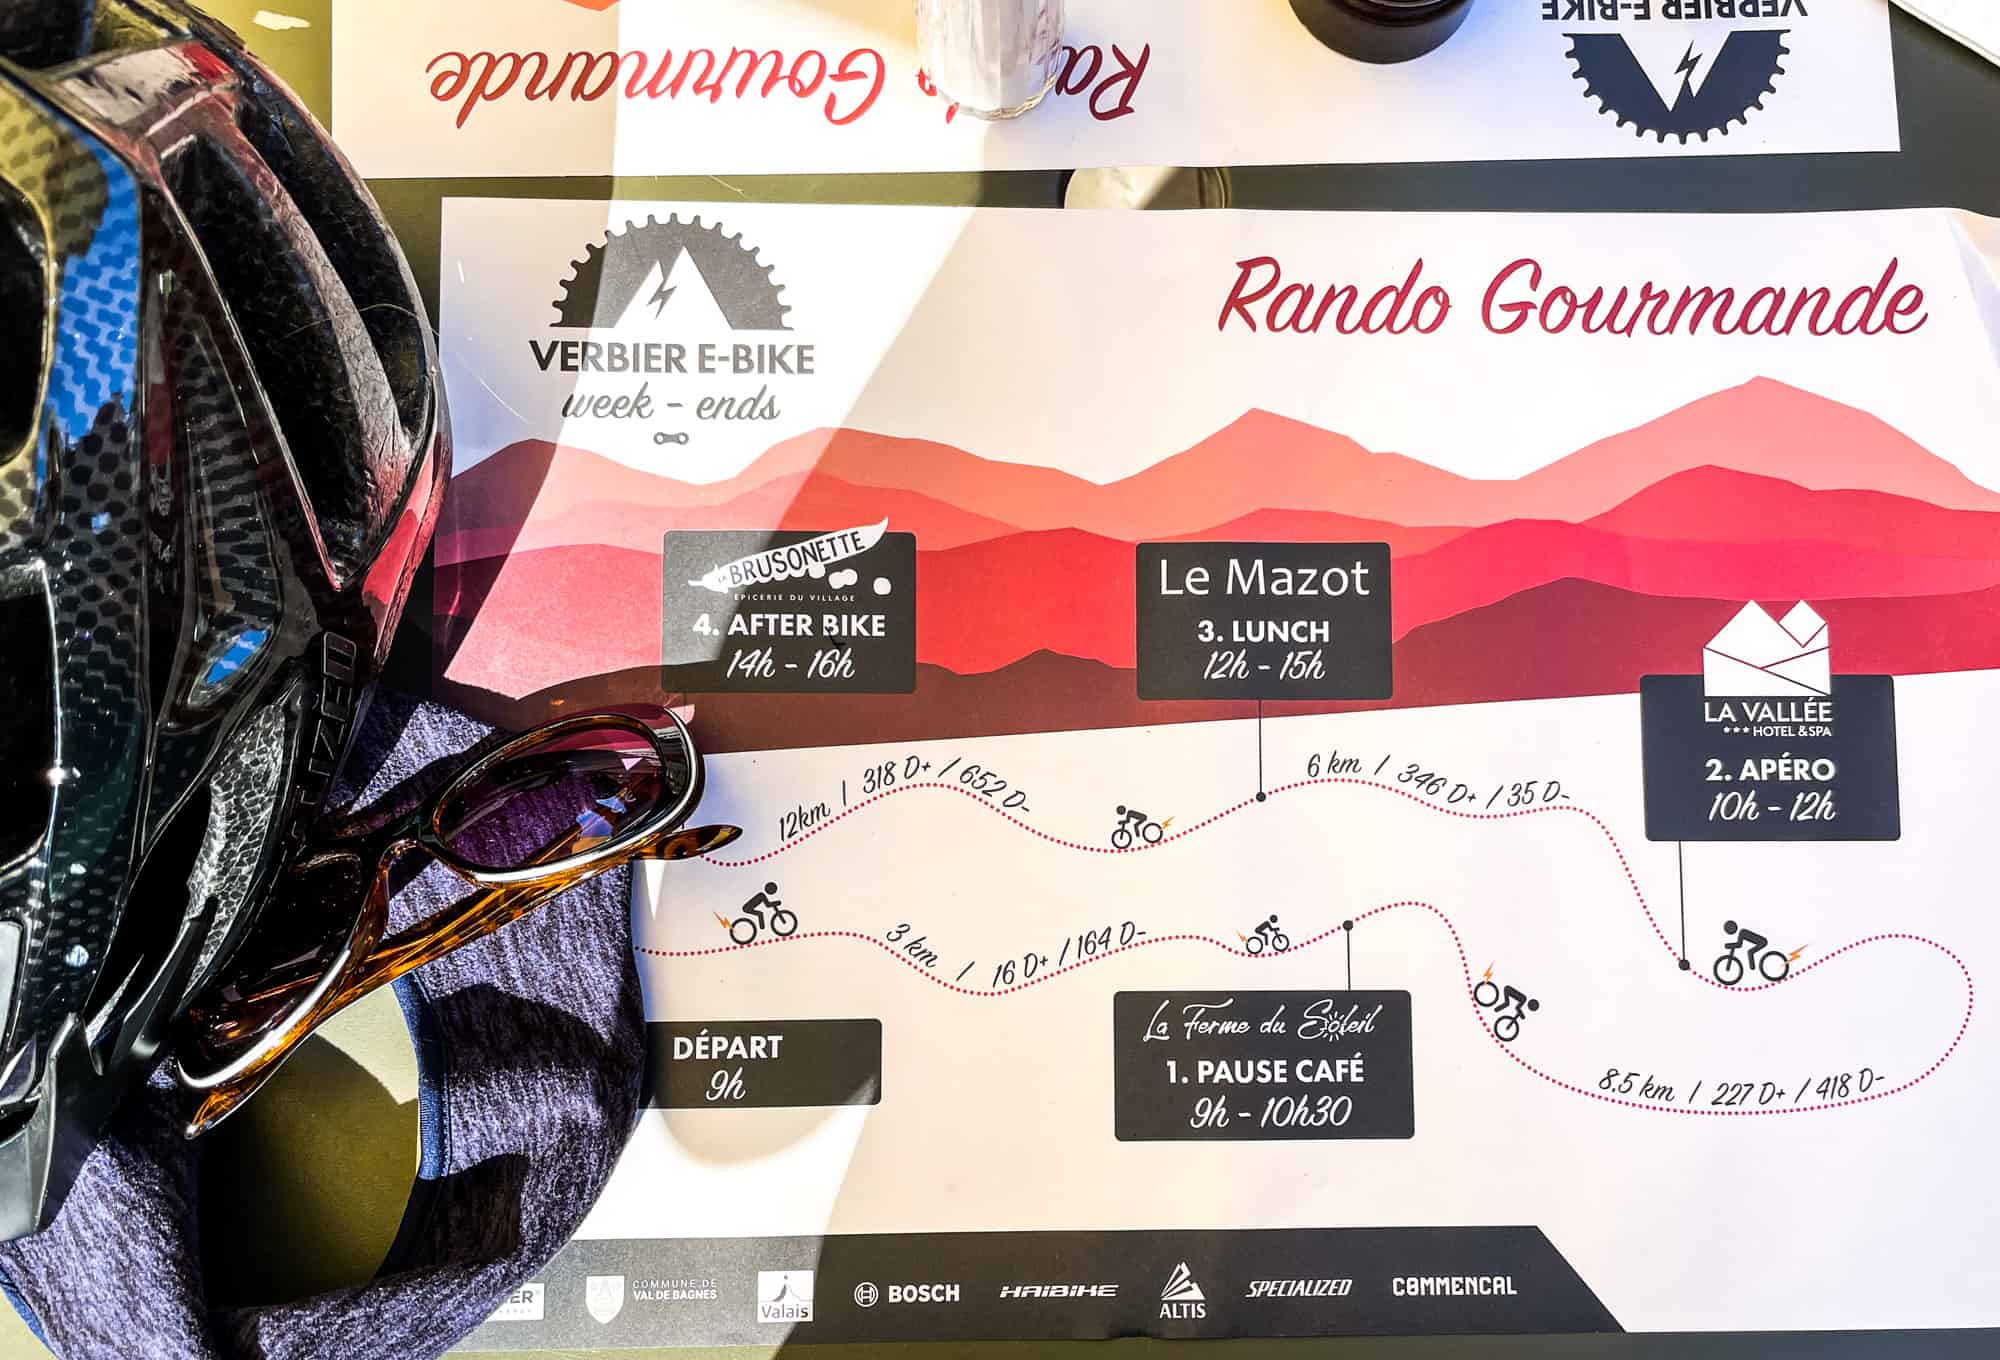 Switzerland - Verbier Ebike Rando Gourmande Route Map and cycling helmet